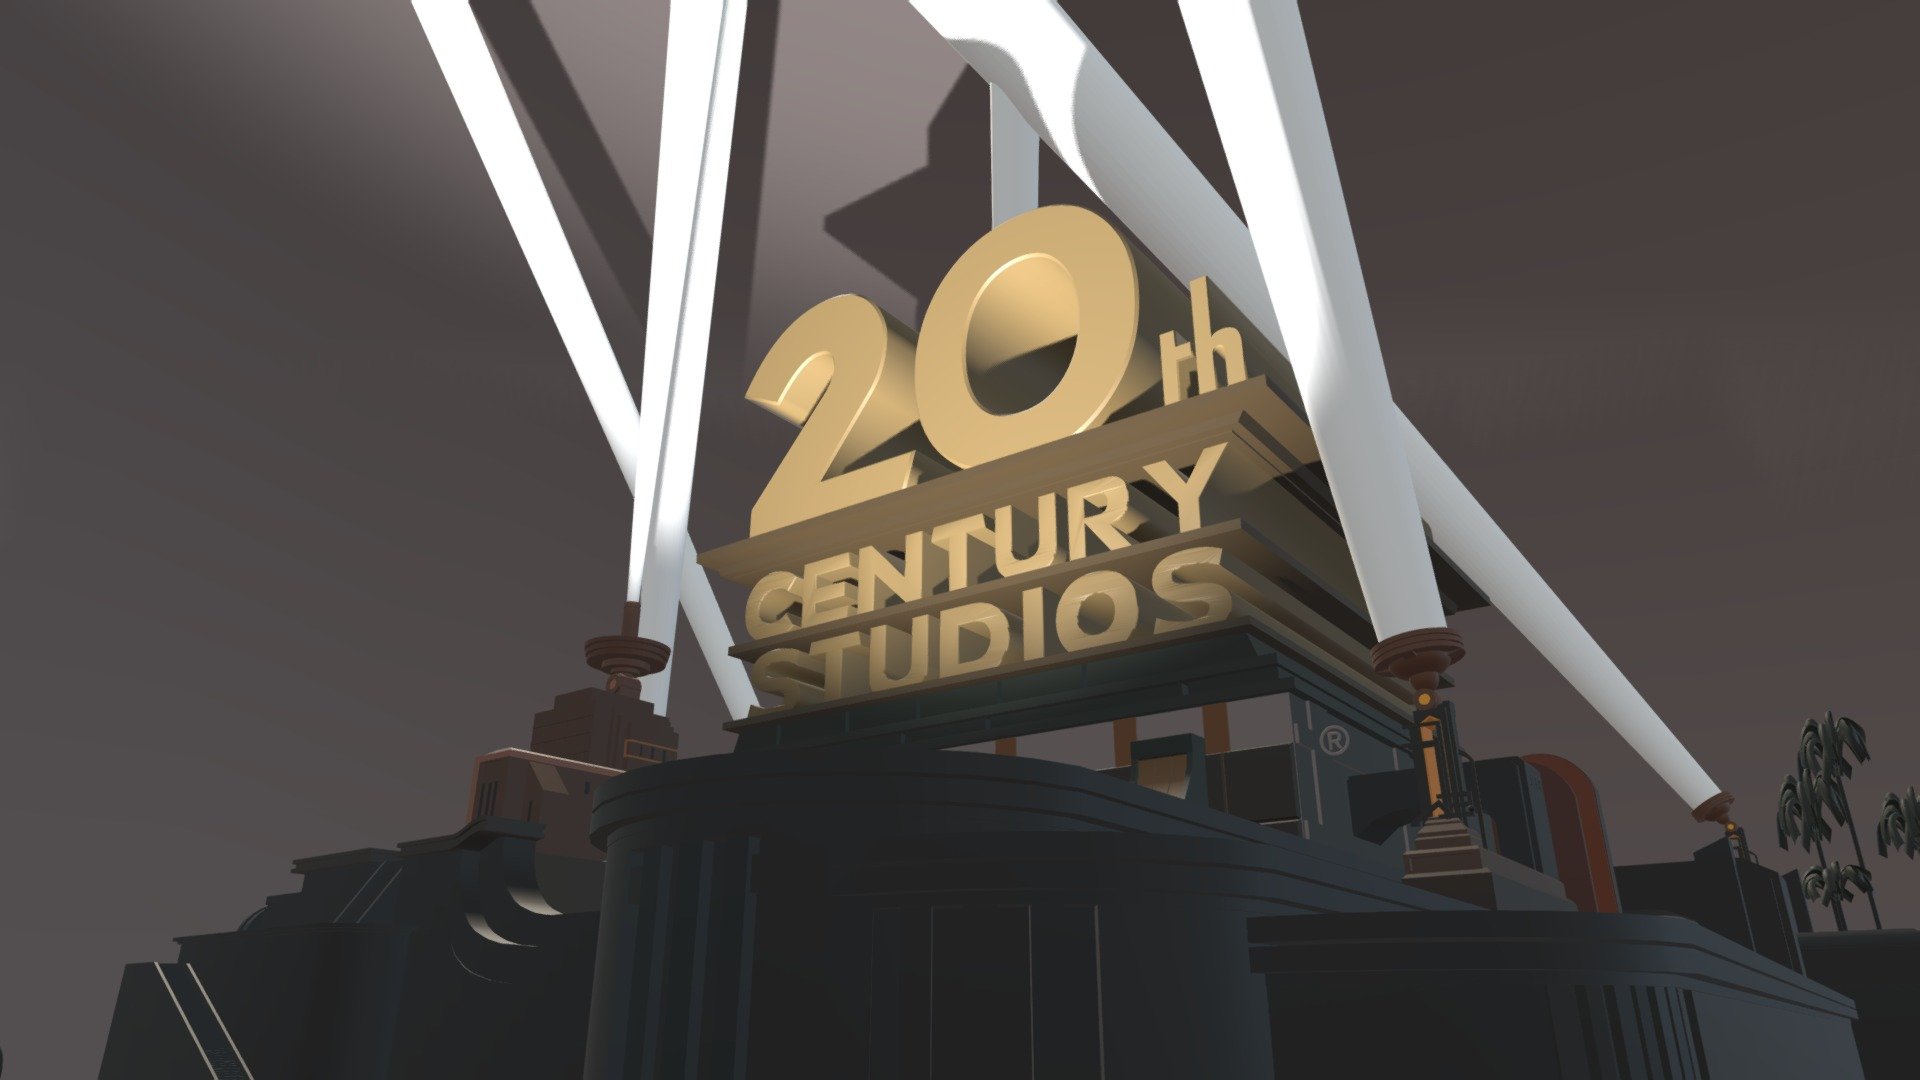 20th century studios 2020 logo - 3D model by Kirby super star 1996